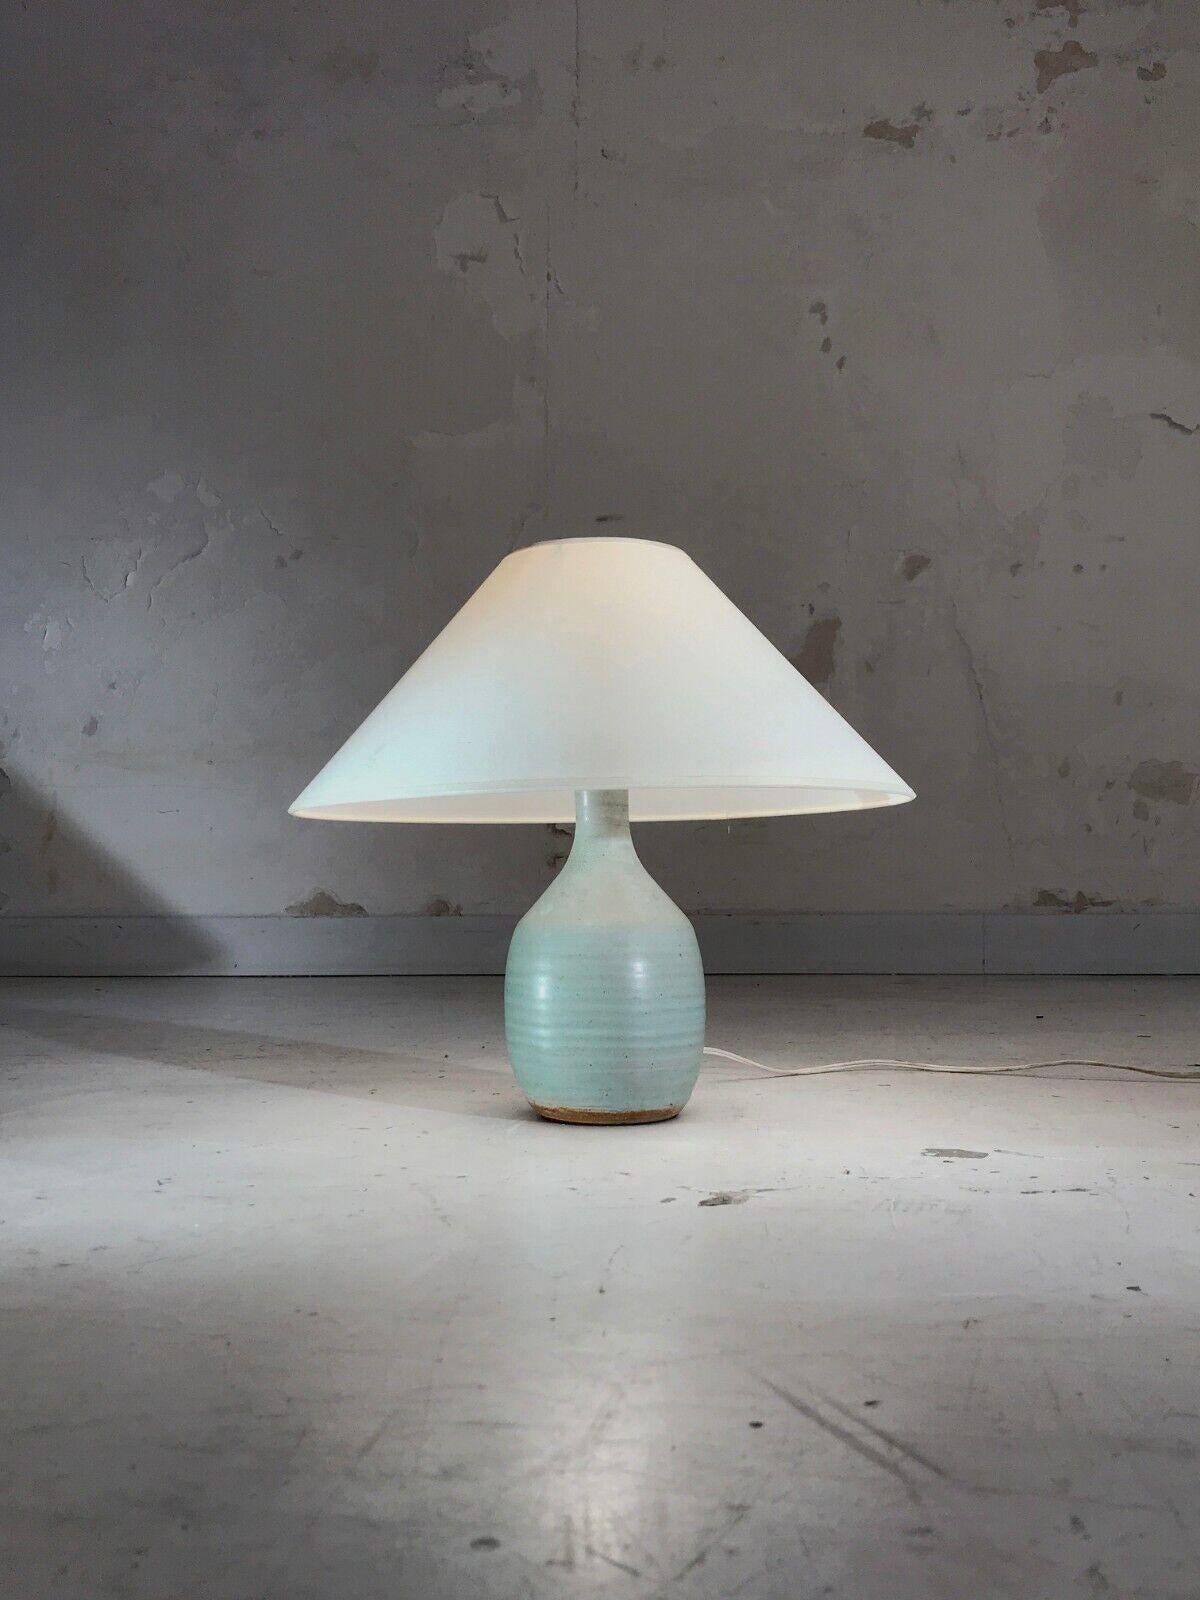 An elegant table lamp, Modernist, Free Form, Popular Art, in thick sky gray blue enameled ceramic, 